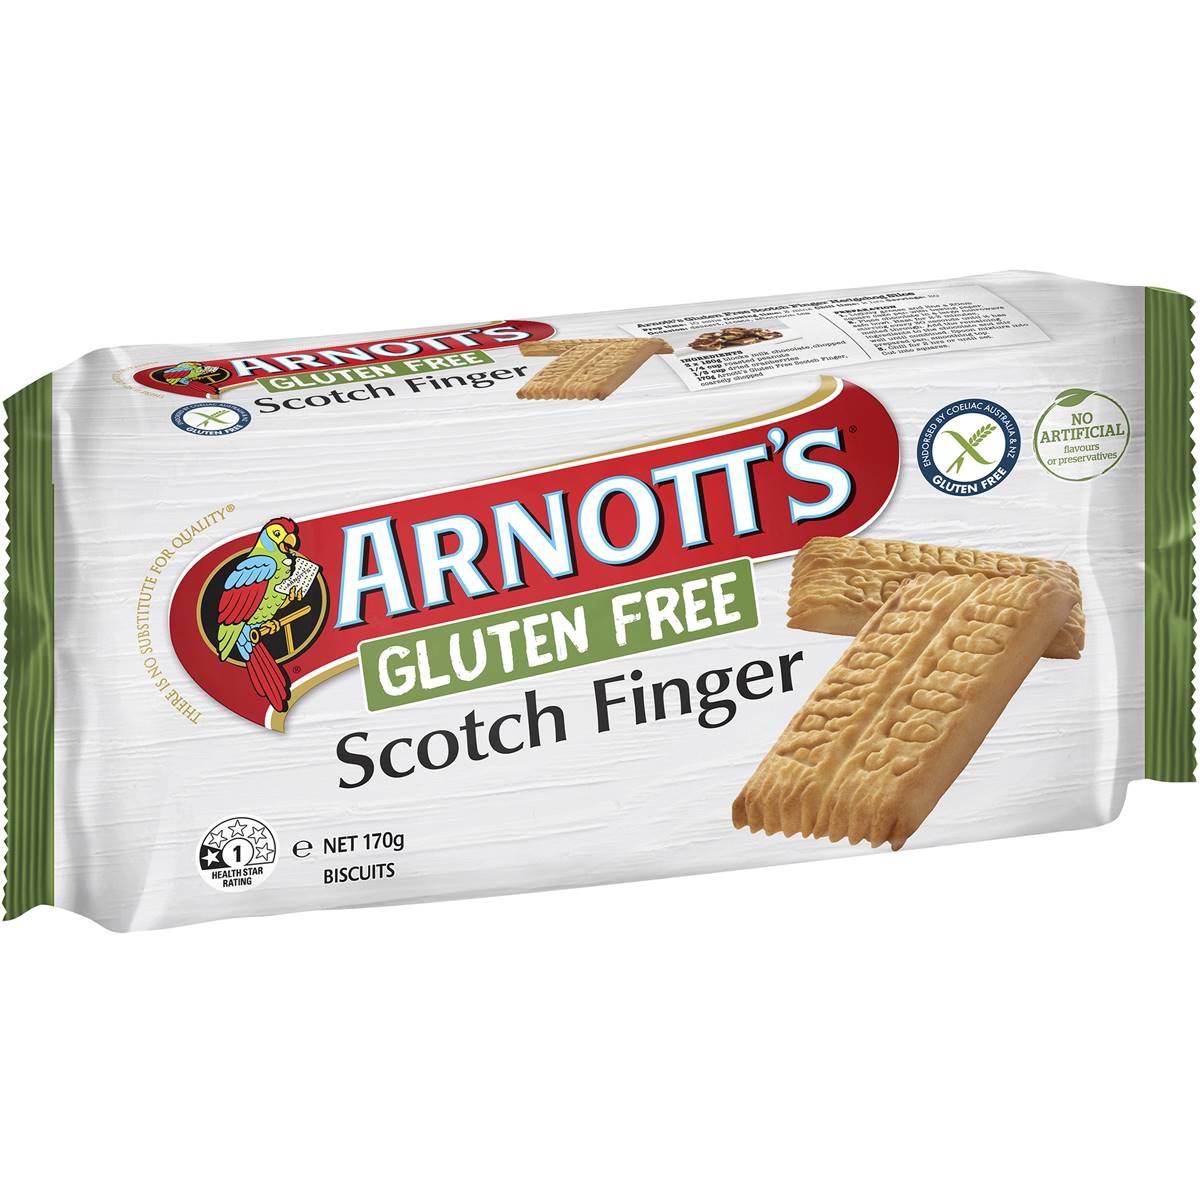 Arnotts Scotch Finger Biscuits GF 170g